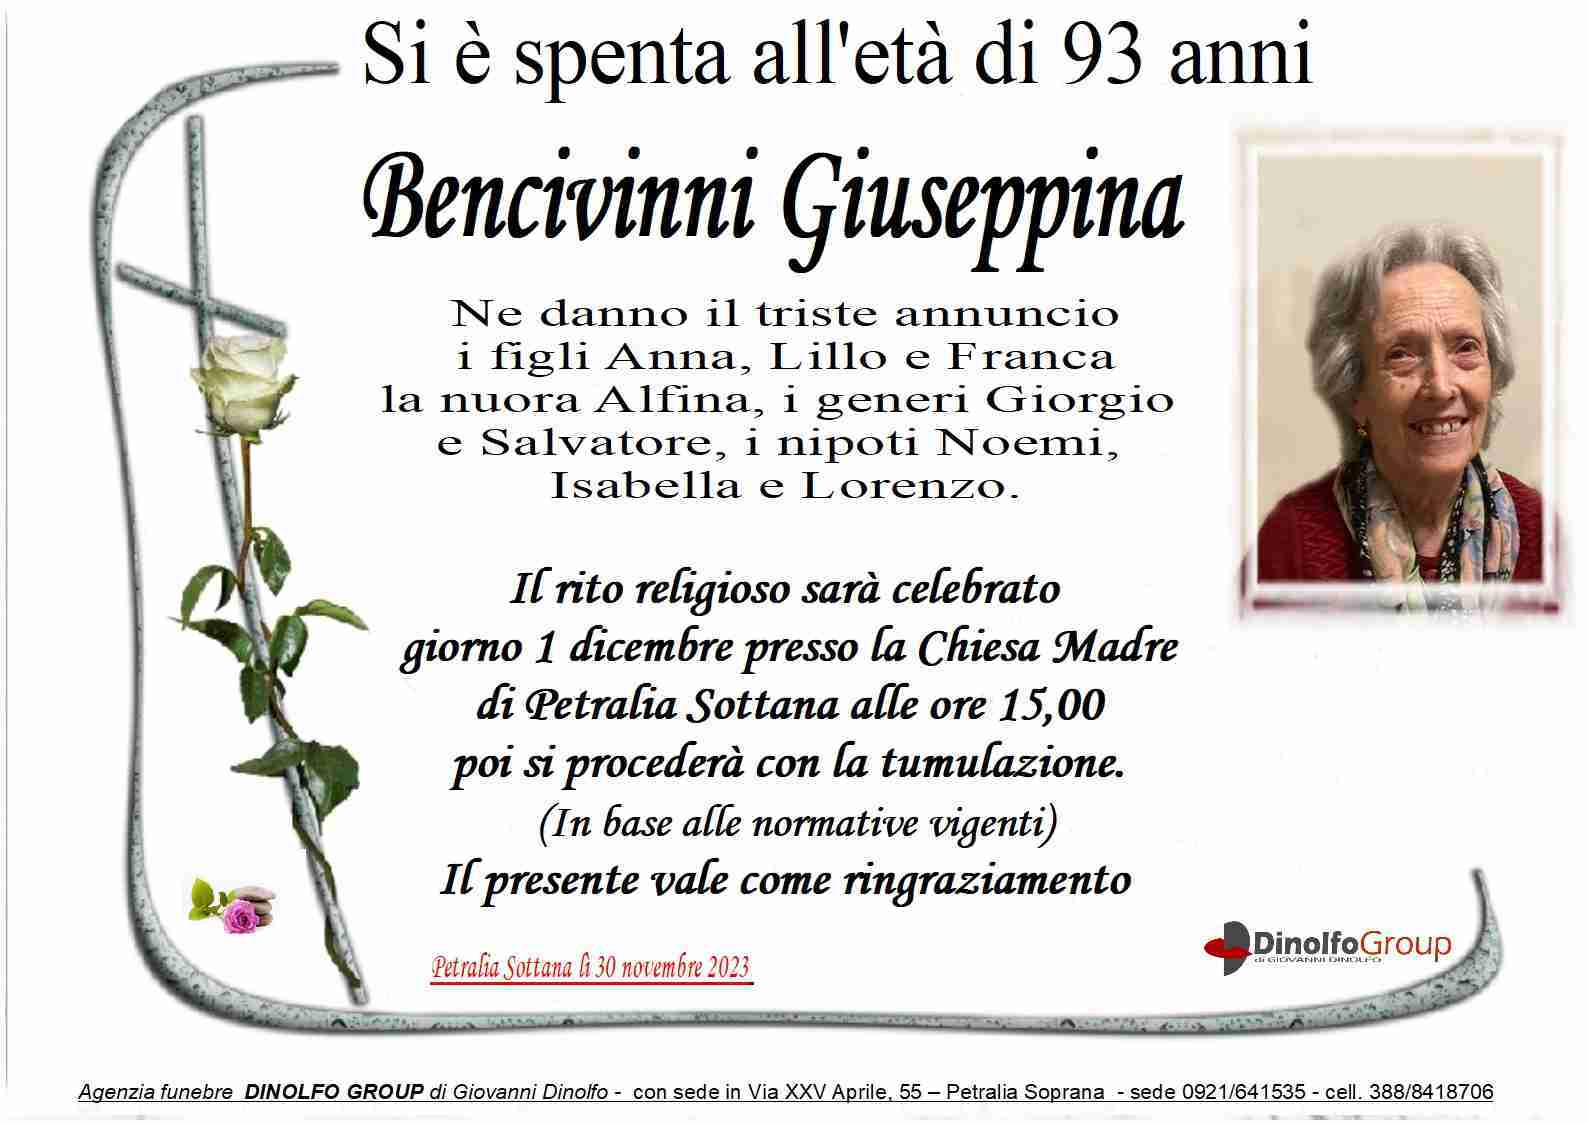 Giuseppa Bencivinni